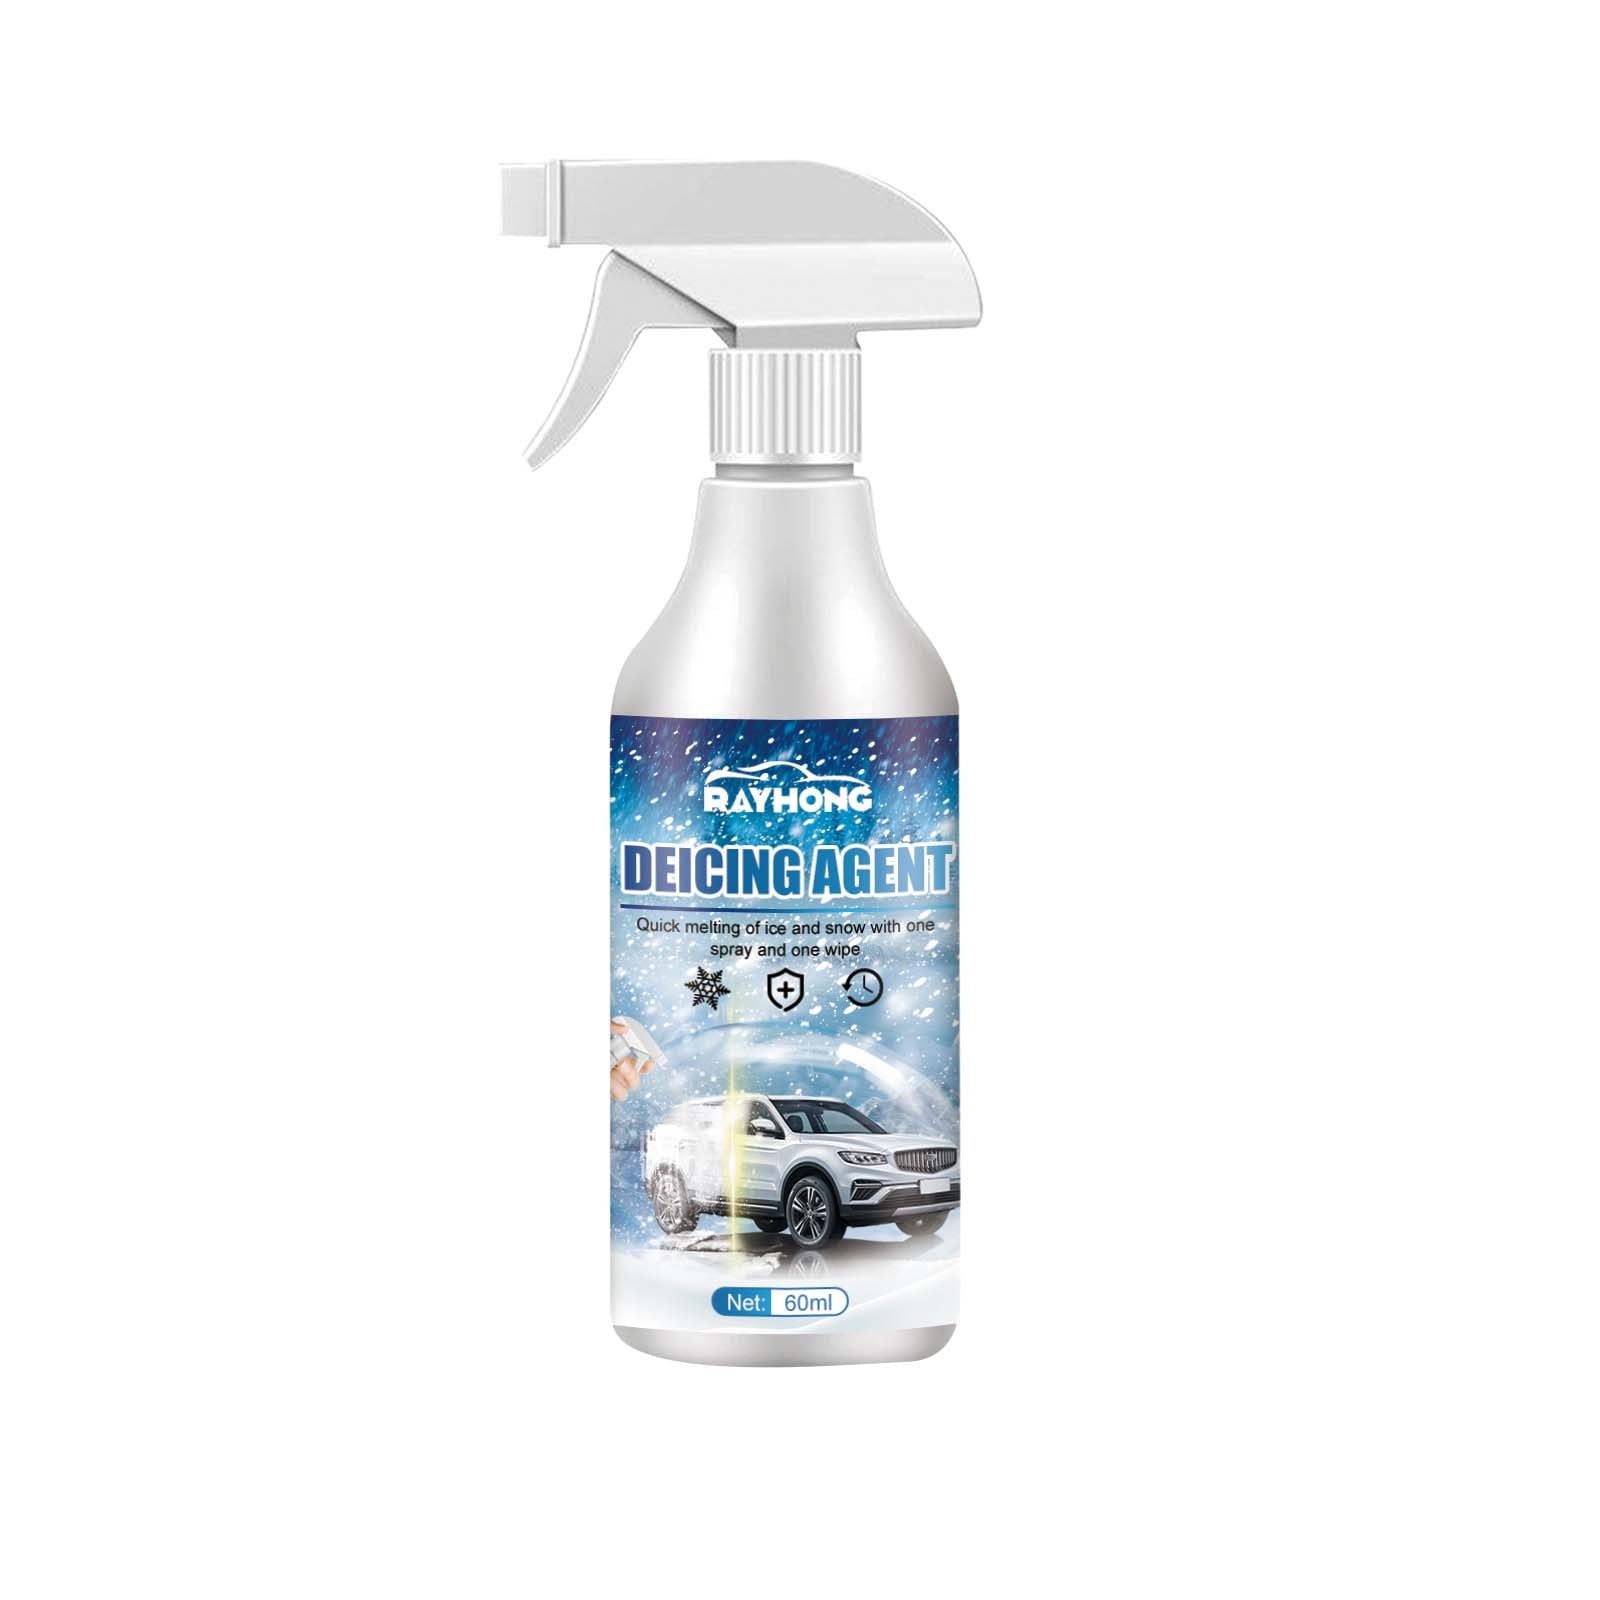 Deicer Windshield Spray 500ml Effecient Defroster Spray For Car Windshield  Effective Deicer Spray Fast Acting Deicing Spray For - AliExpress